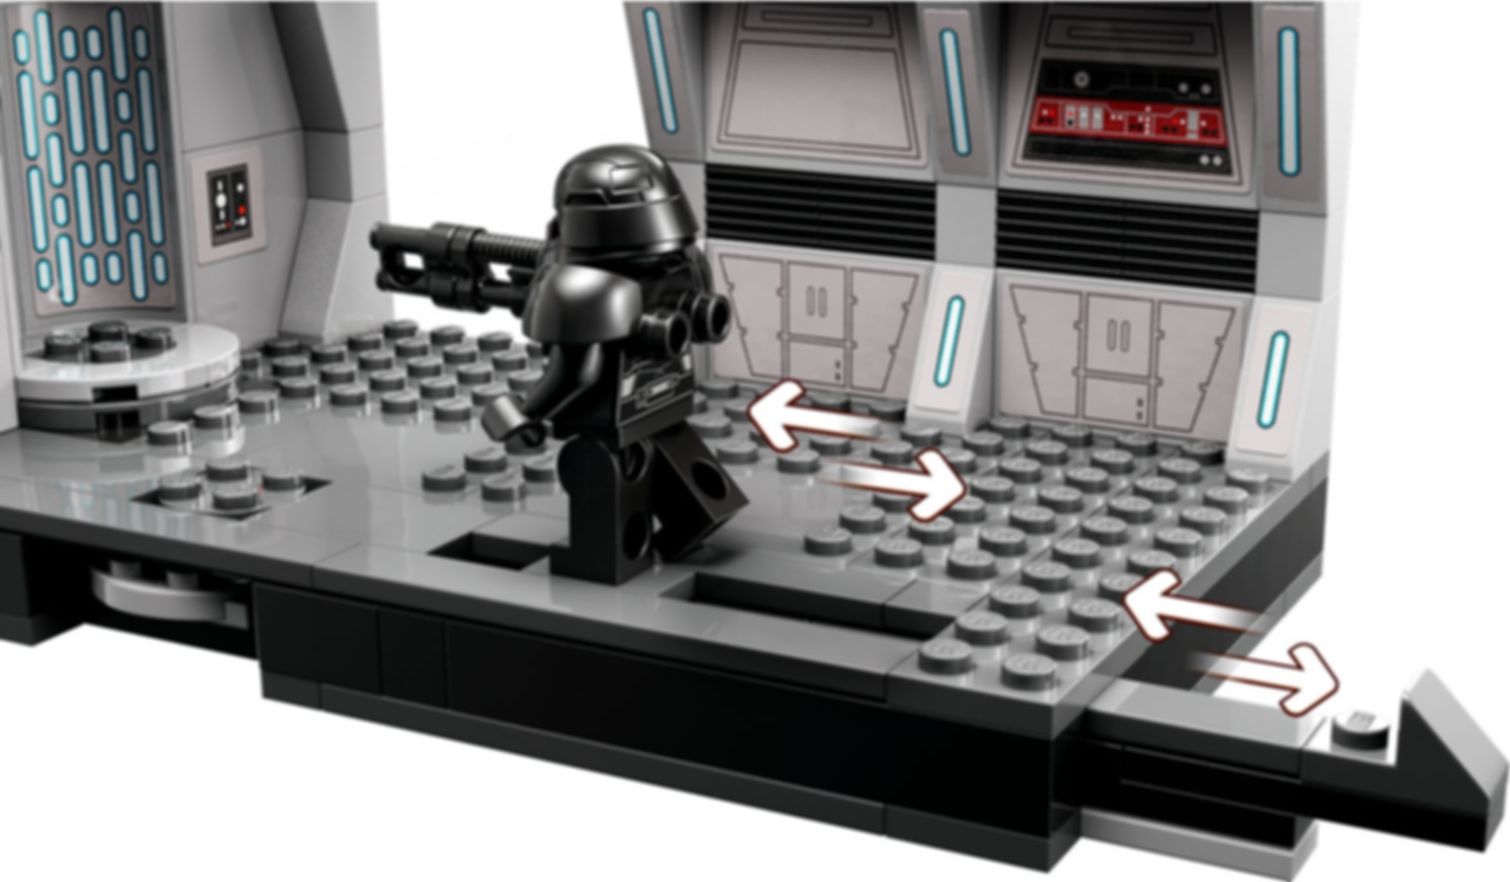 LEGO® Star Wars Dark Trooper™ Attack components